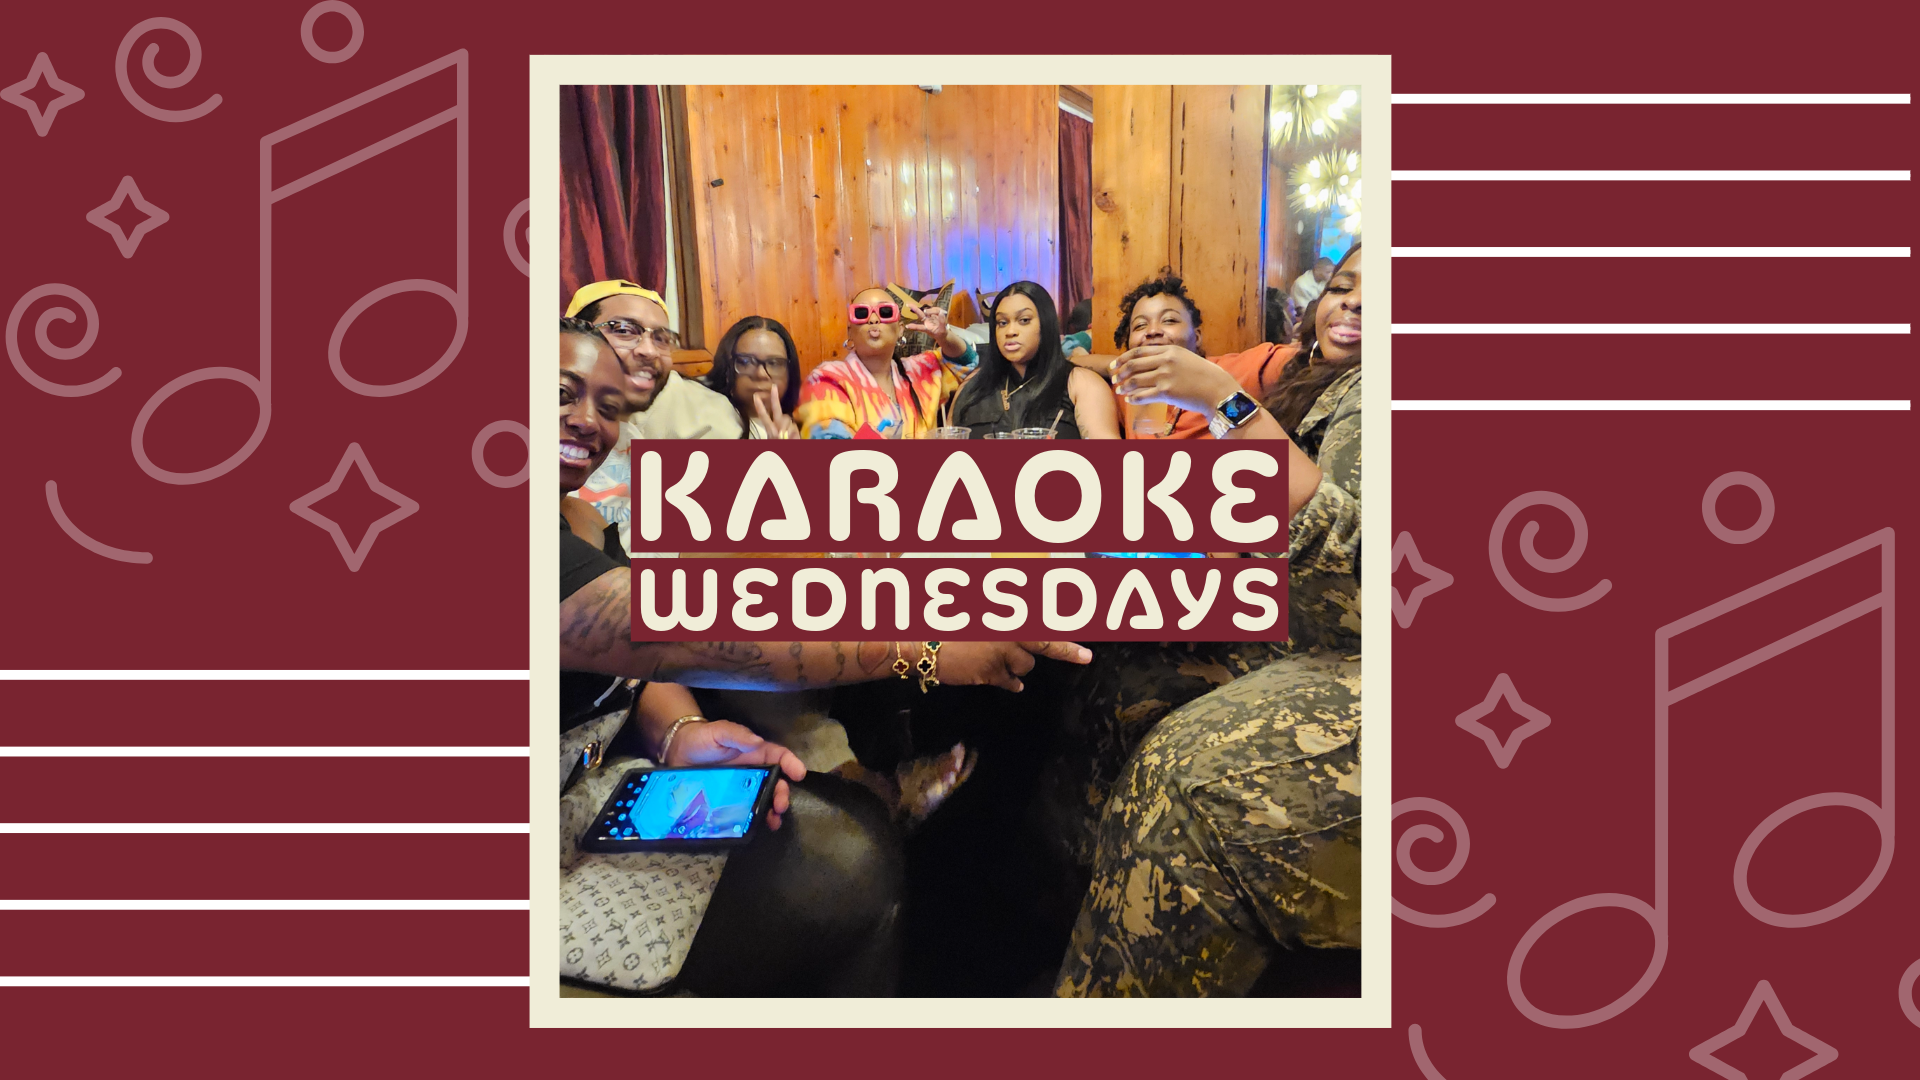 Karaoke West Los Angeles Event Promotional Image